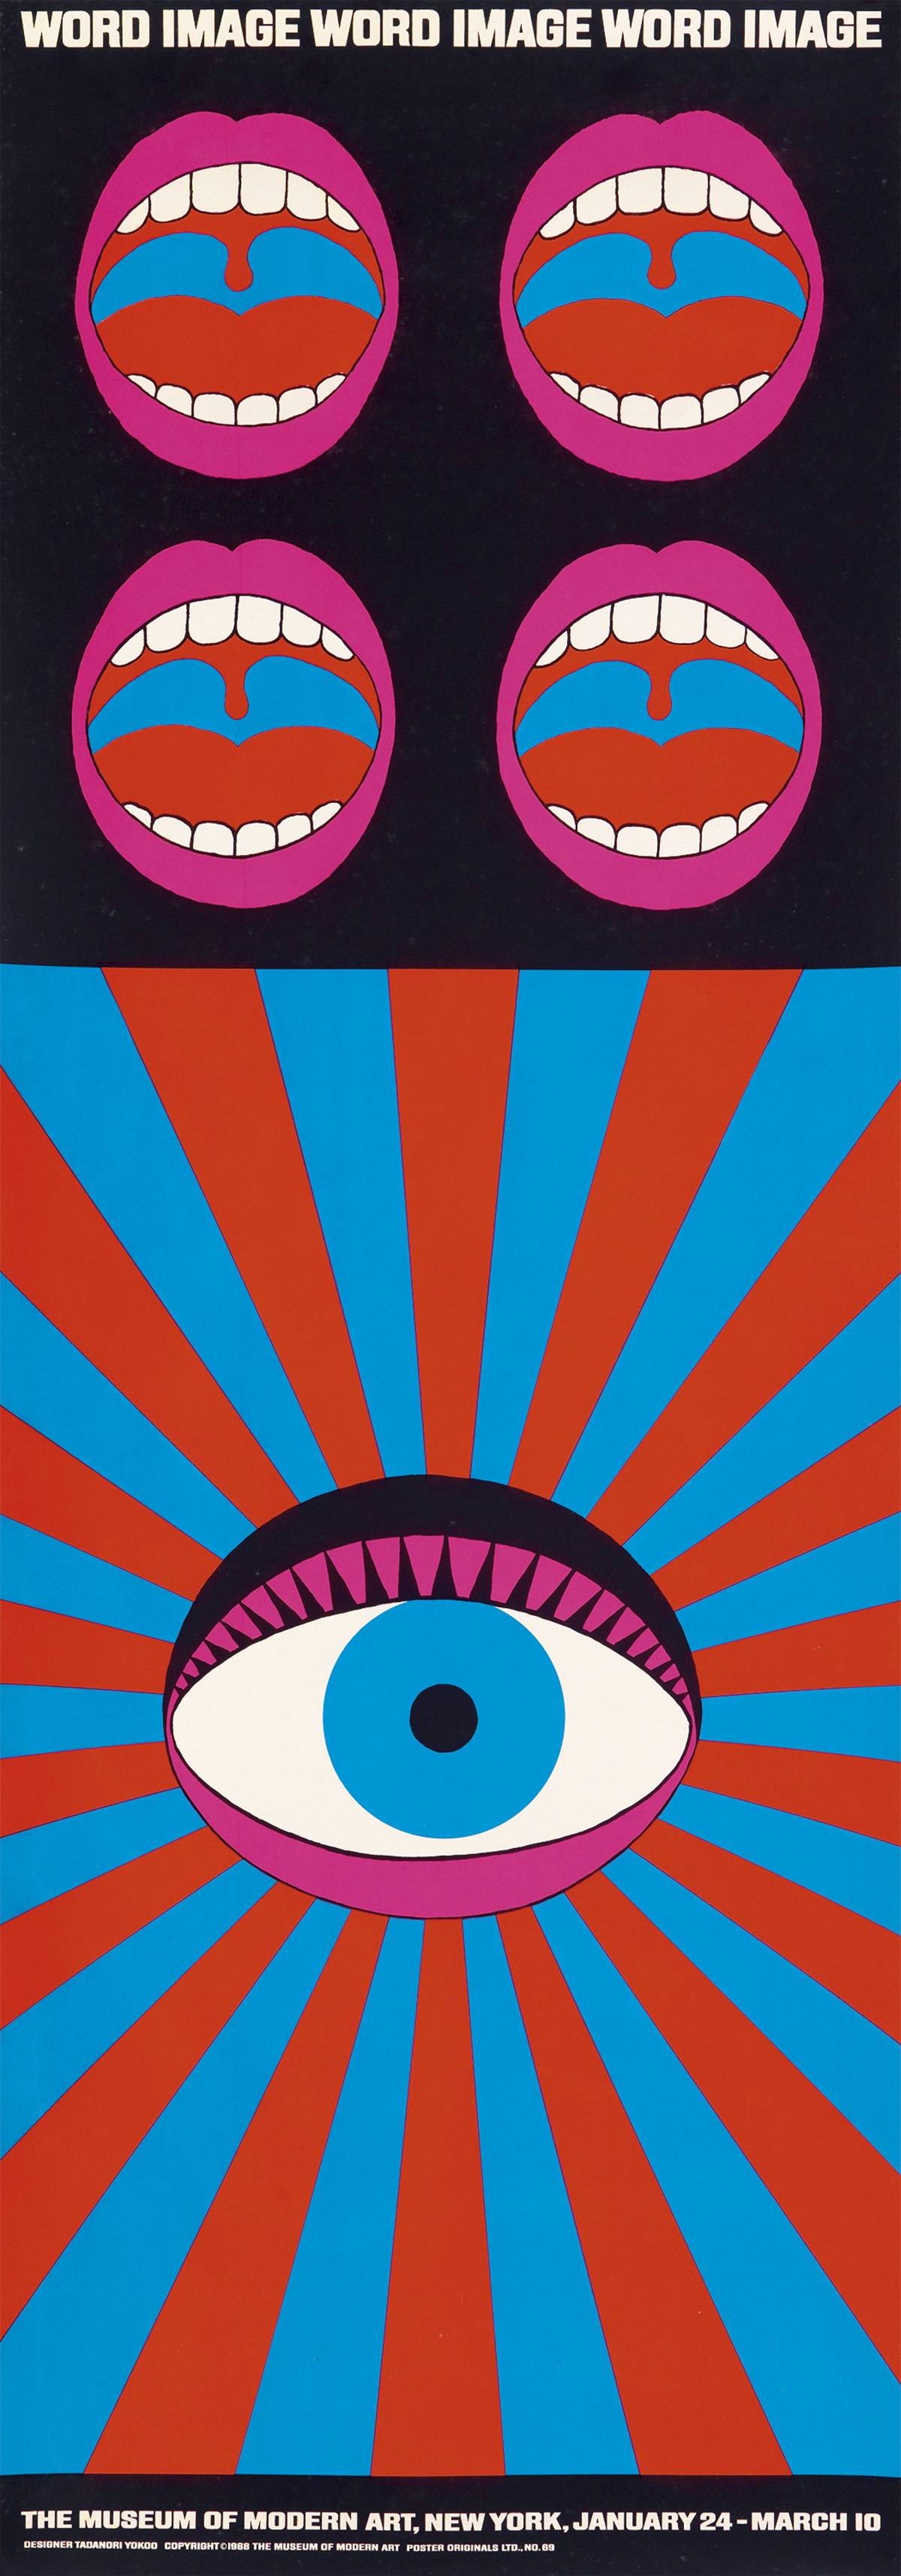 TADANORI YOKOO (1936- ). WORD IMAGE. 1968. 49x12 inches, 124x30 cm. Poster Originals Ltd., [New York.]